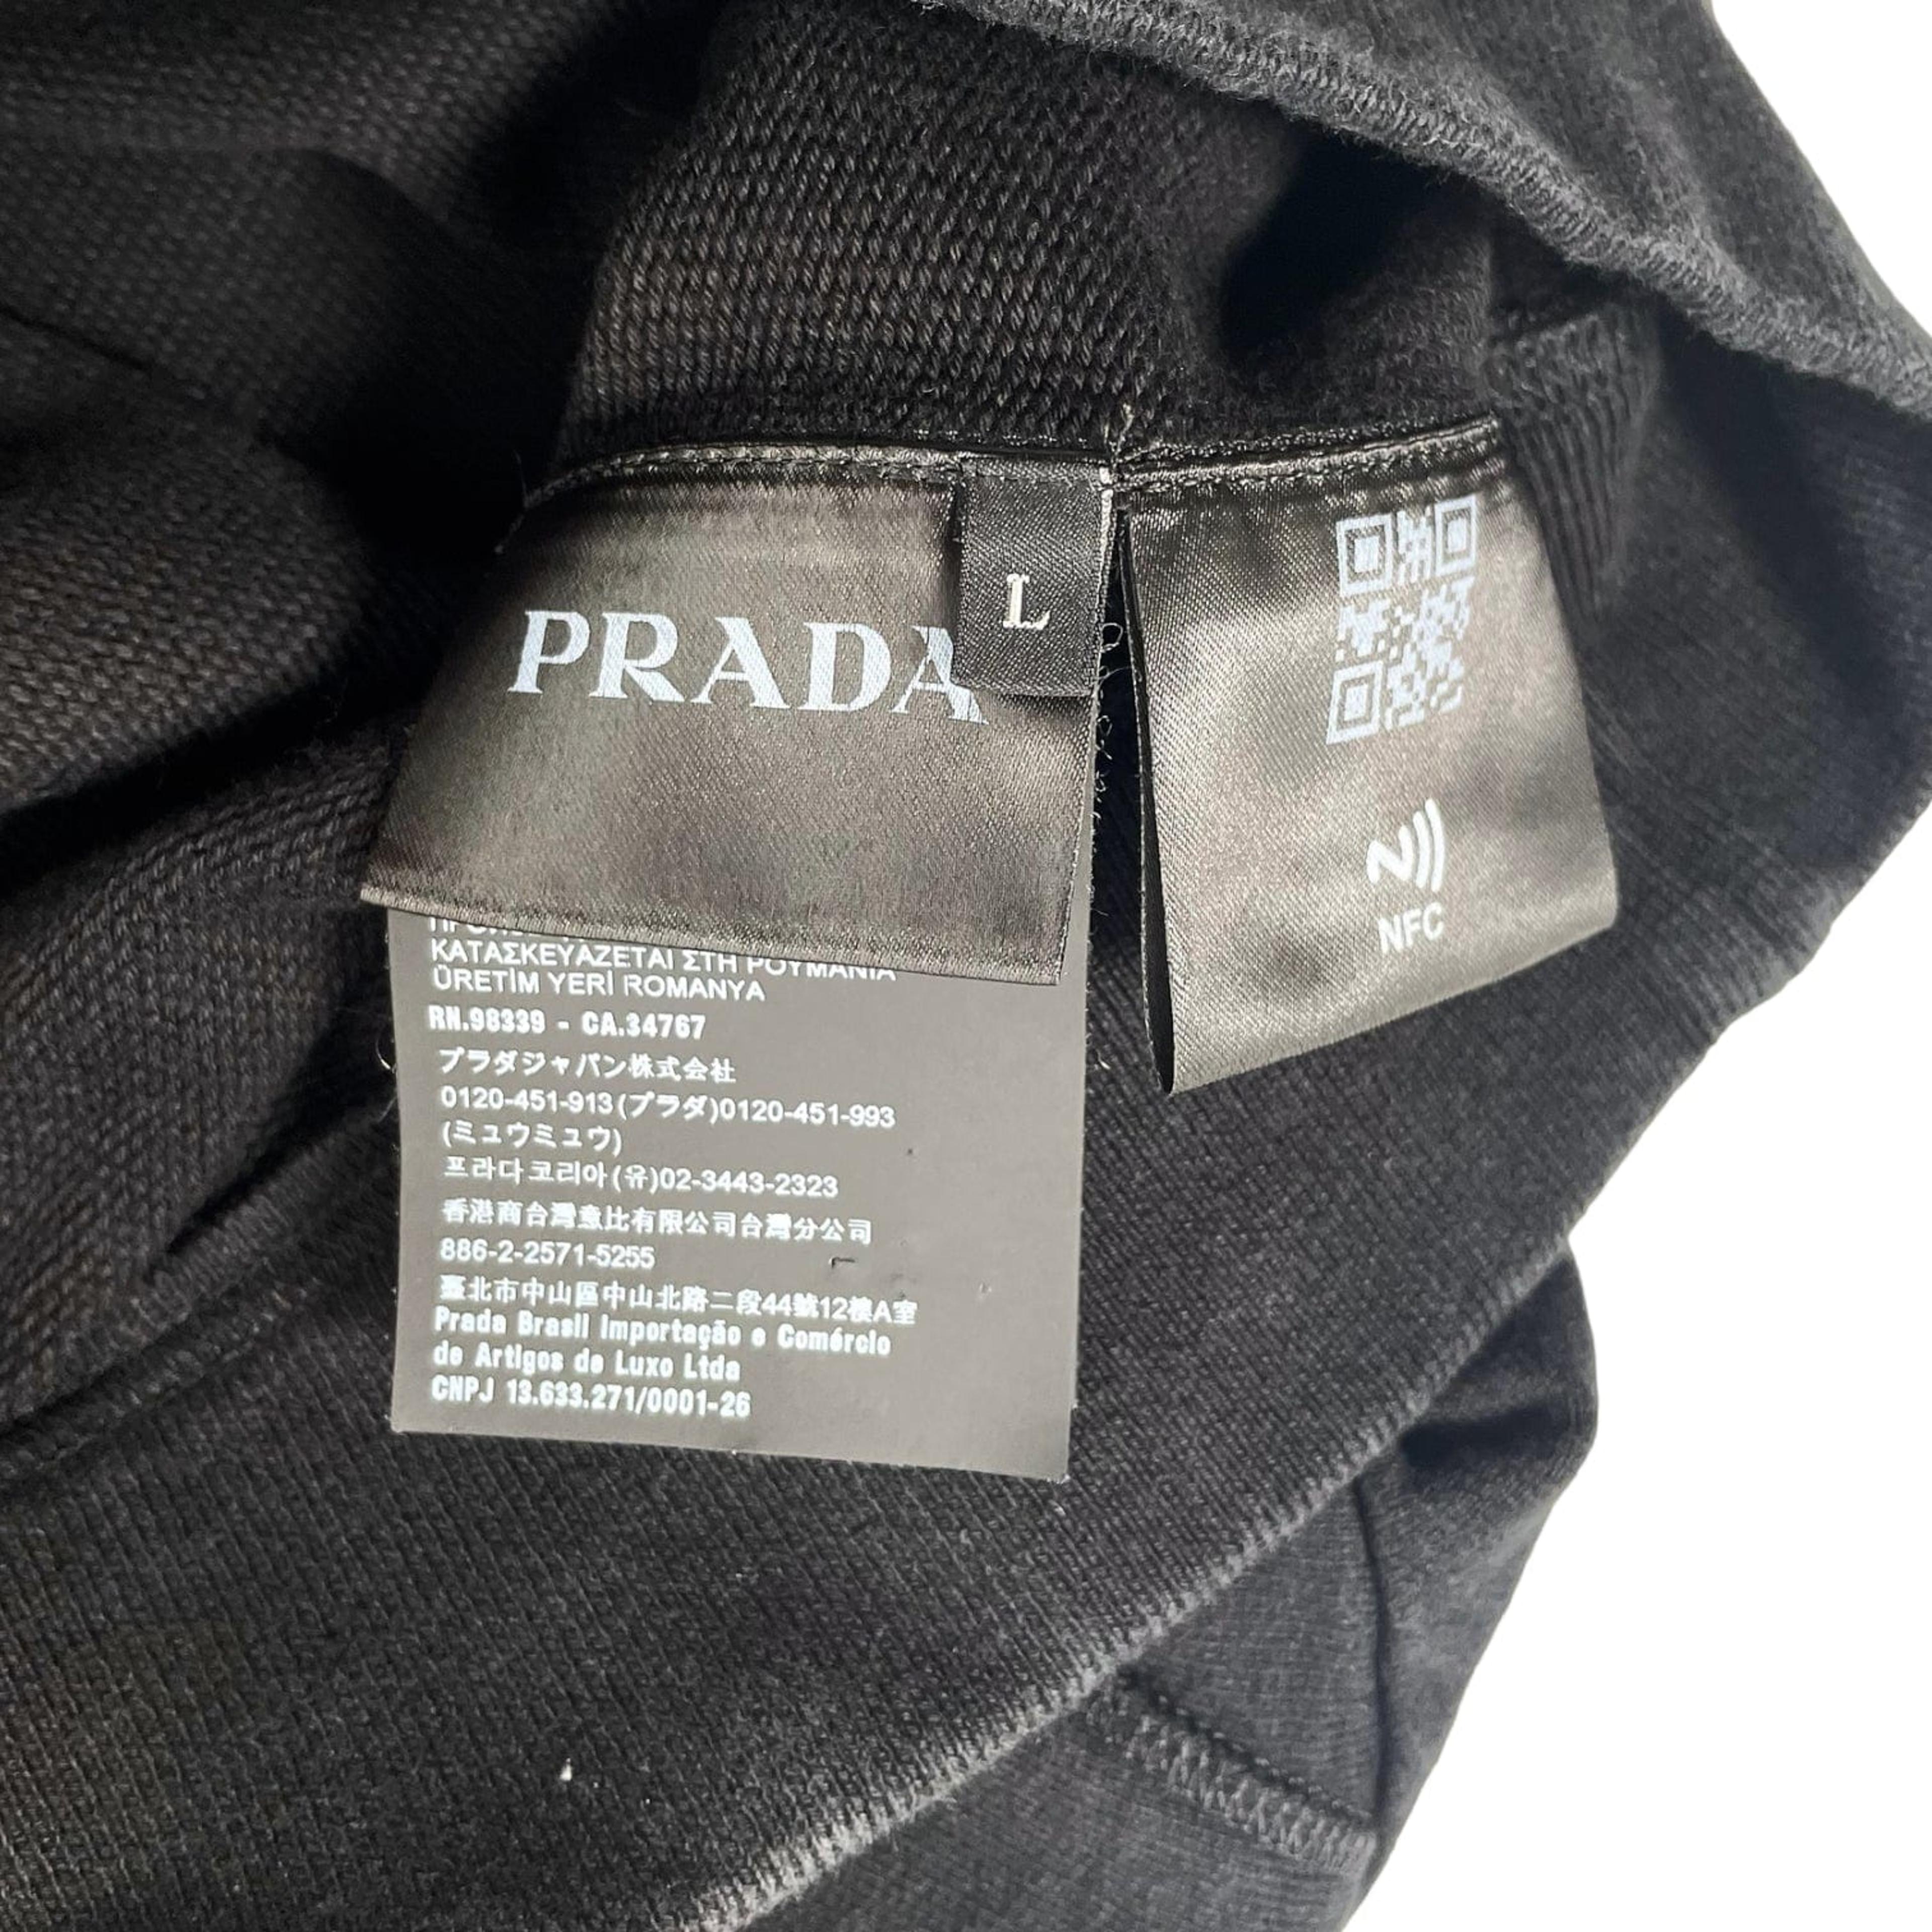 Alternate View 3 of Prada Knitted Logo Crewneck Sweatshirt Black Pre-Owned